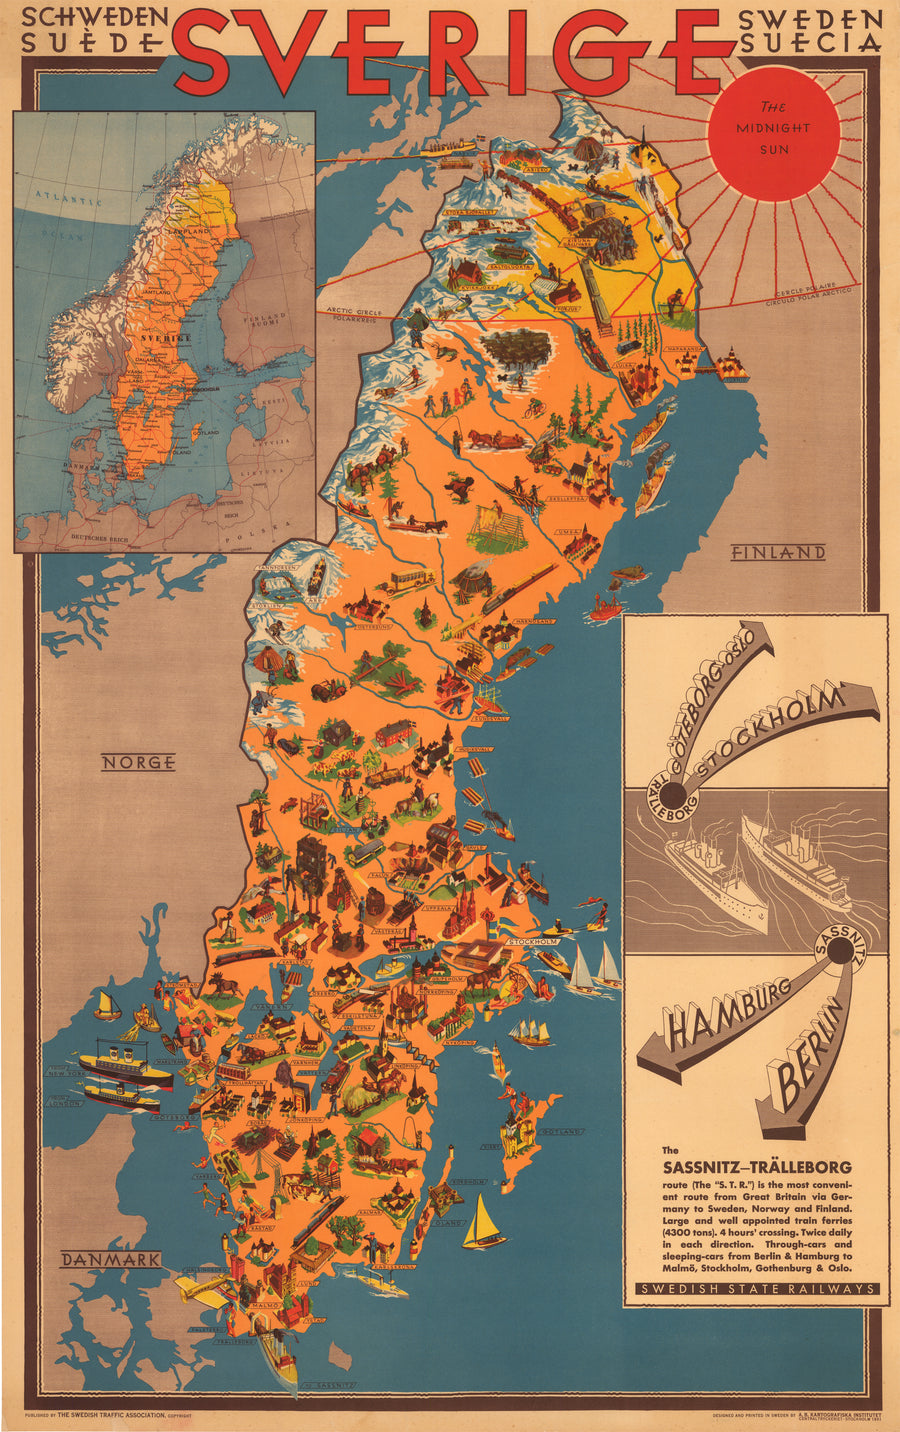 Vintage Travel Poster Schweden Suede Sverige Sweden Suecia By: A.B. Kartografiska Institutet Date: 1931 